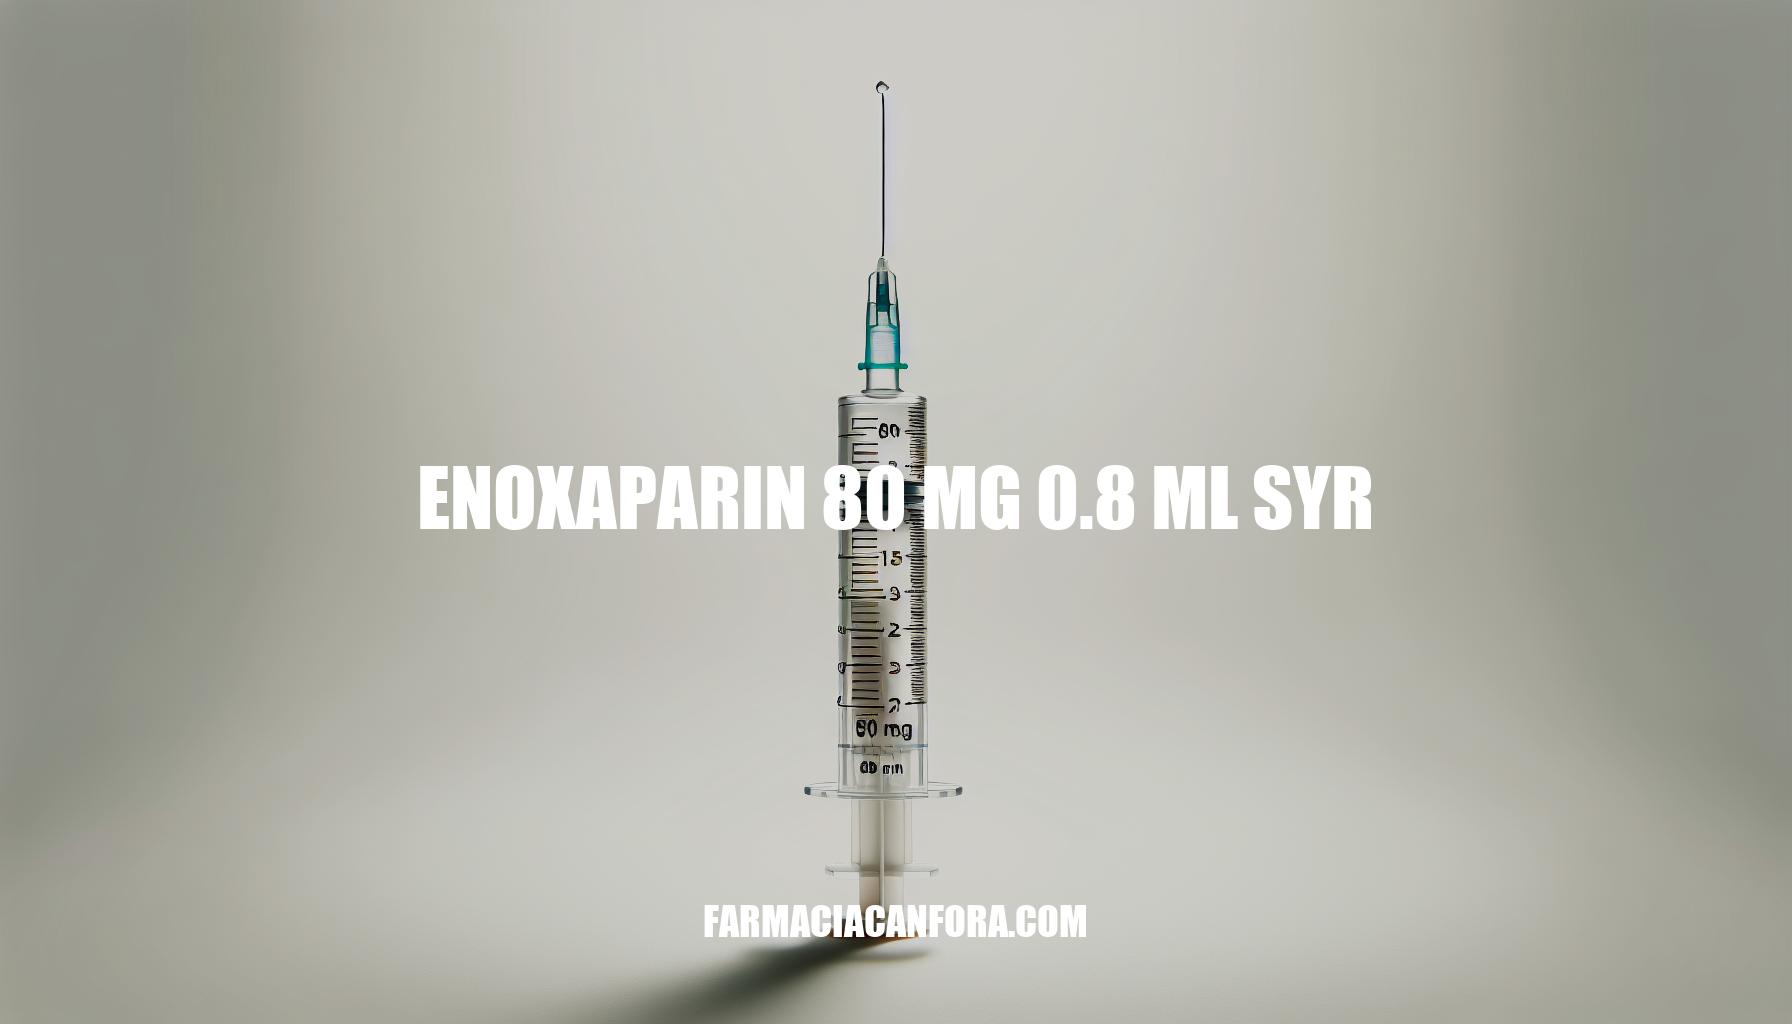 Understanding Enoxaparin 80 mg 0.8 ml Syringe